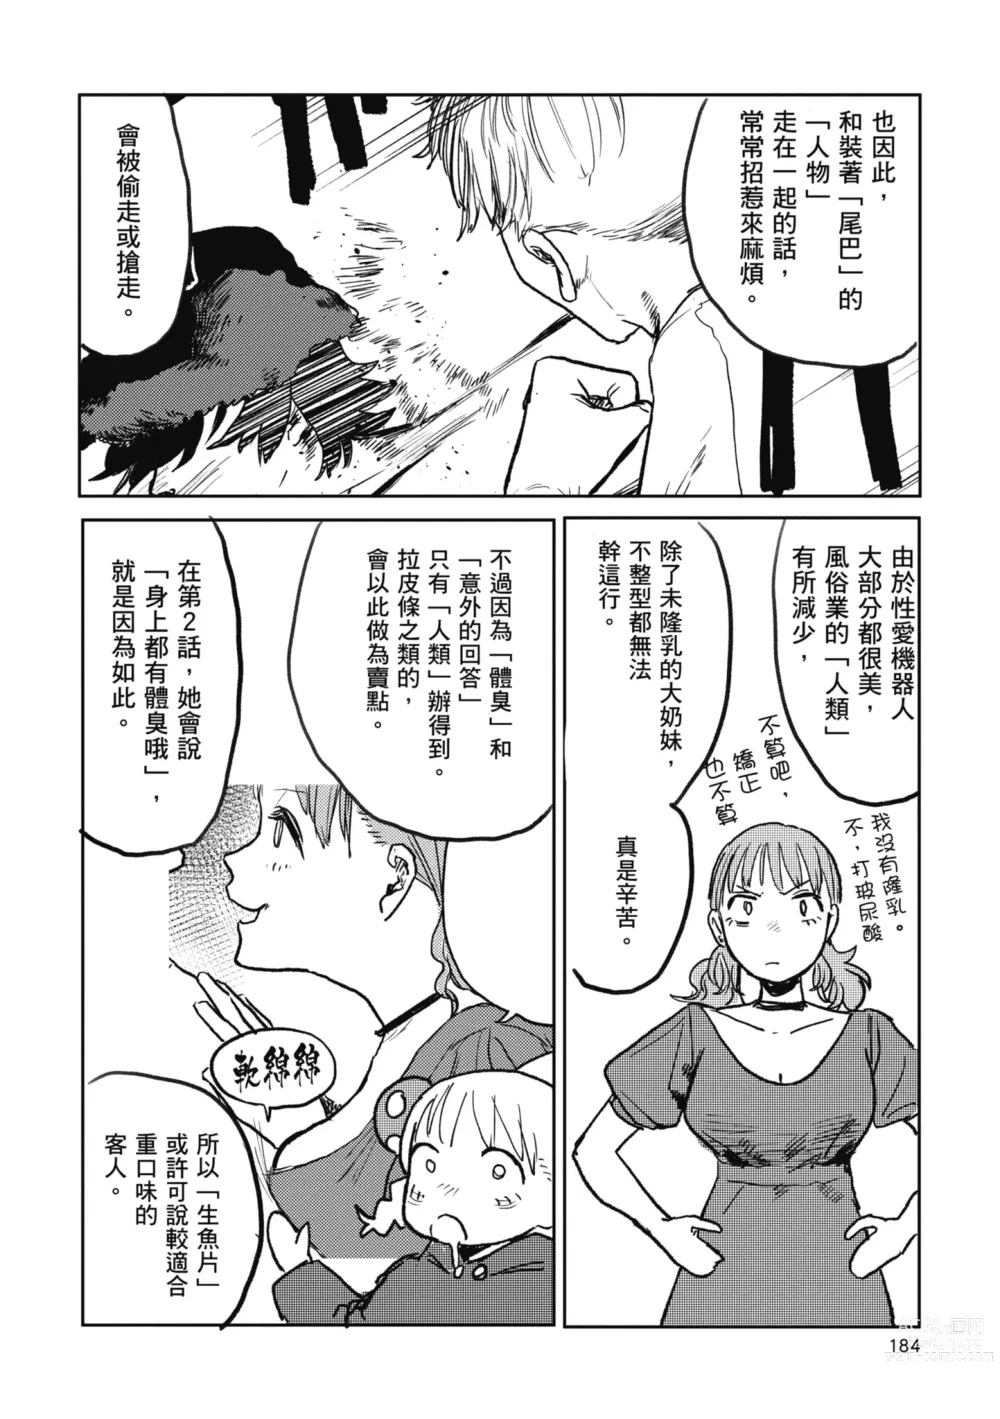 Page 186 of manga BETTER THAN SEX